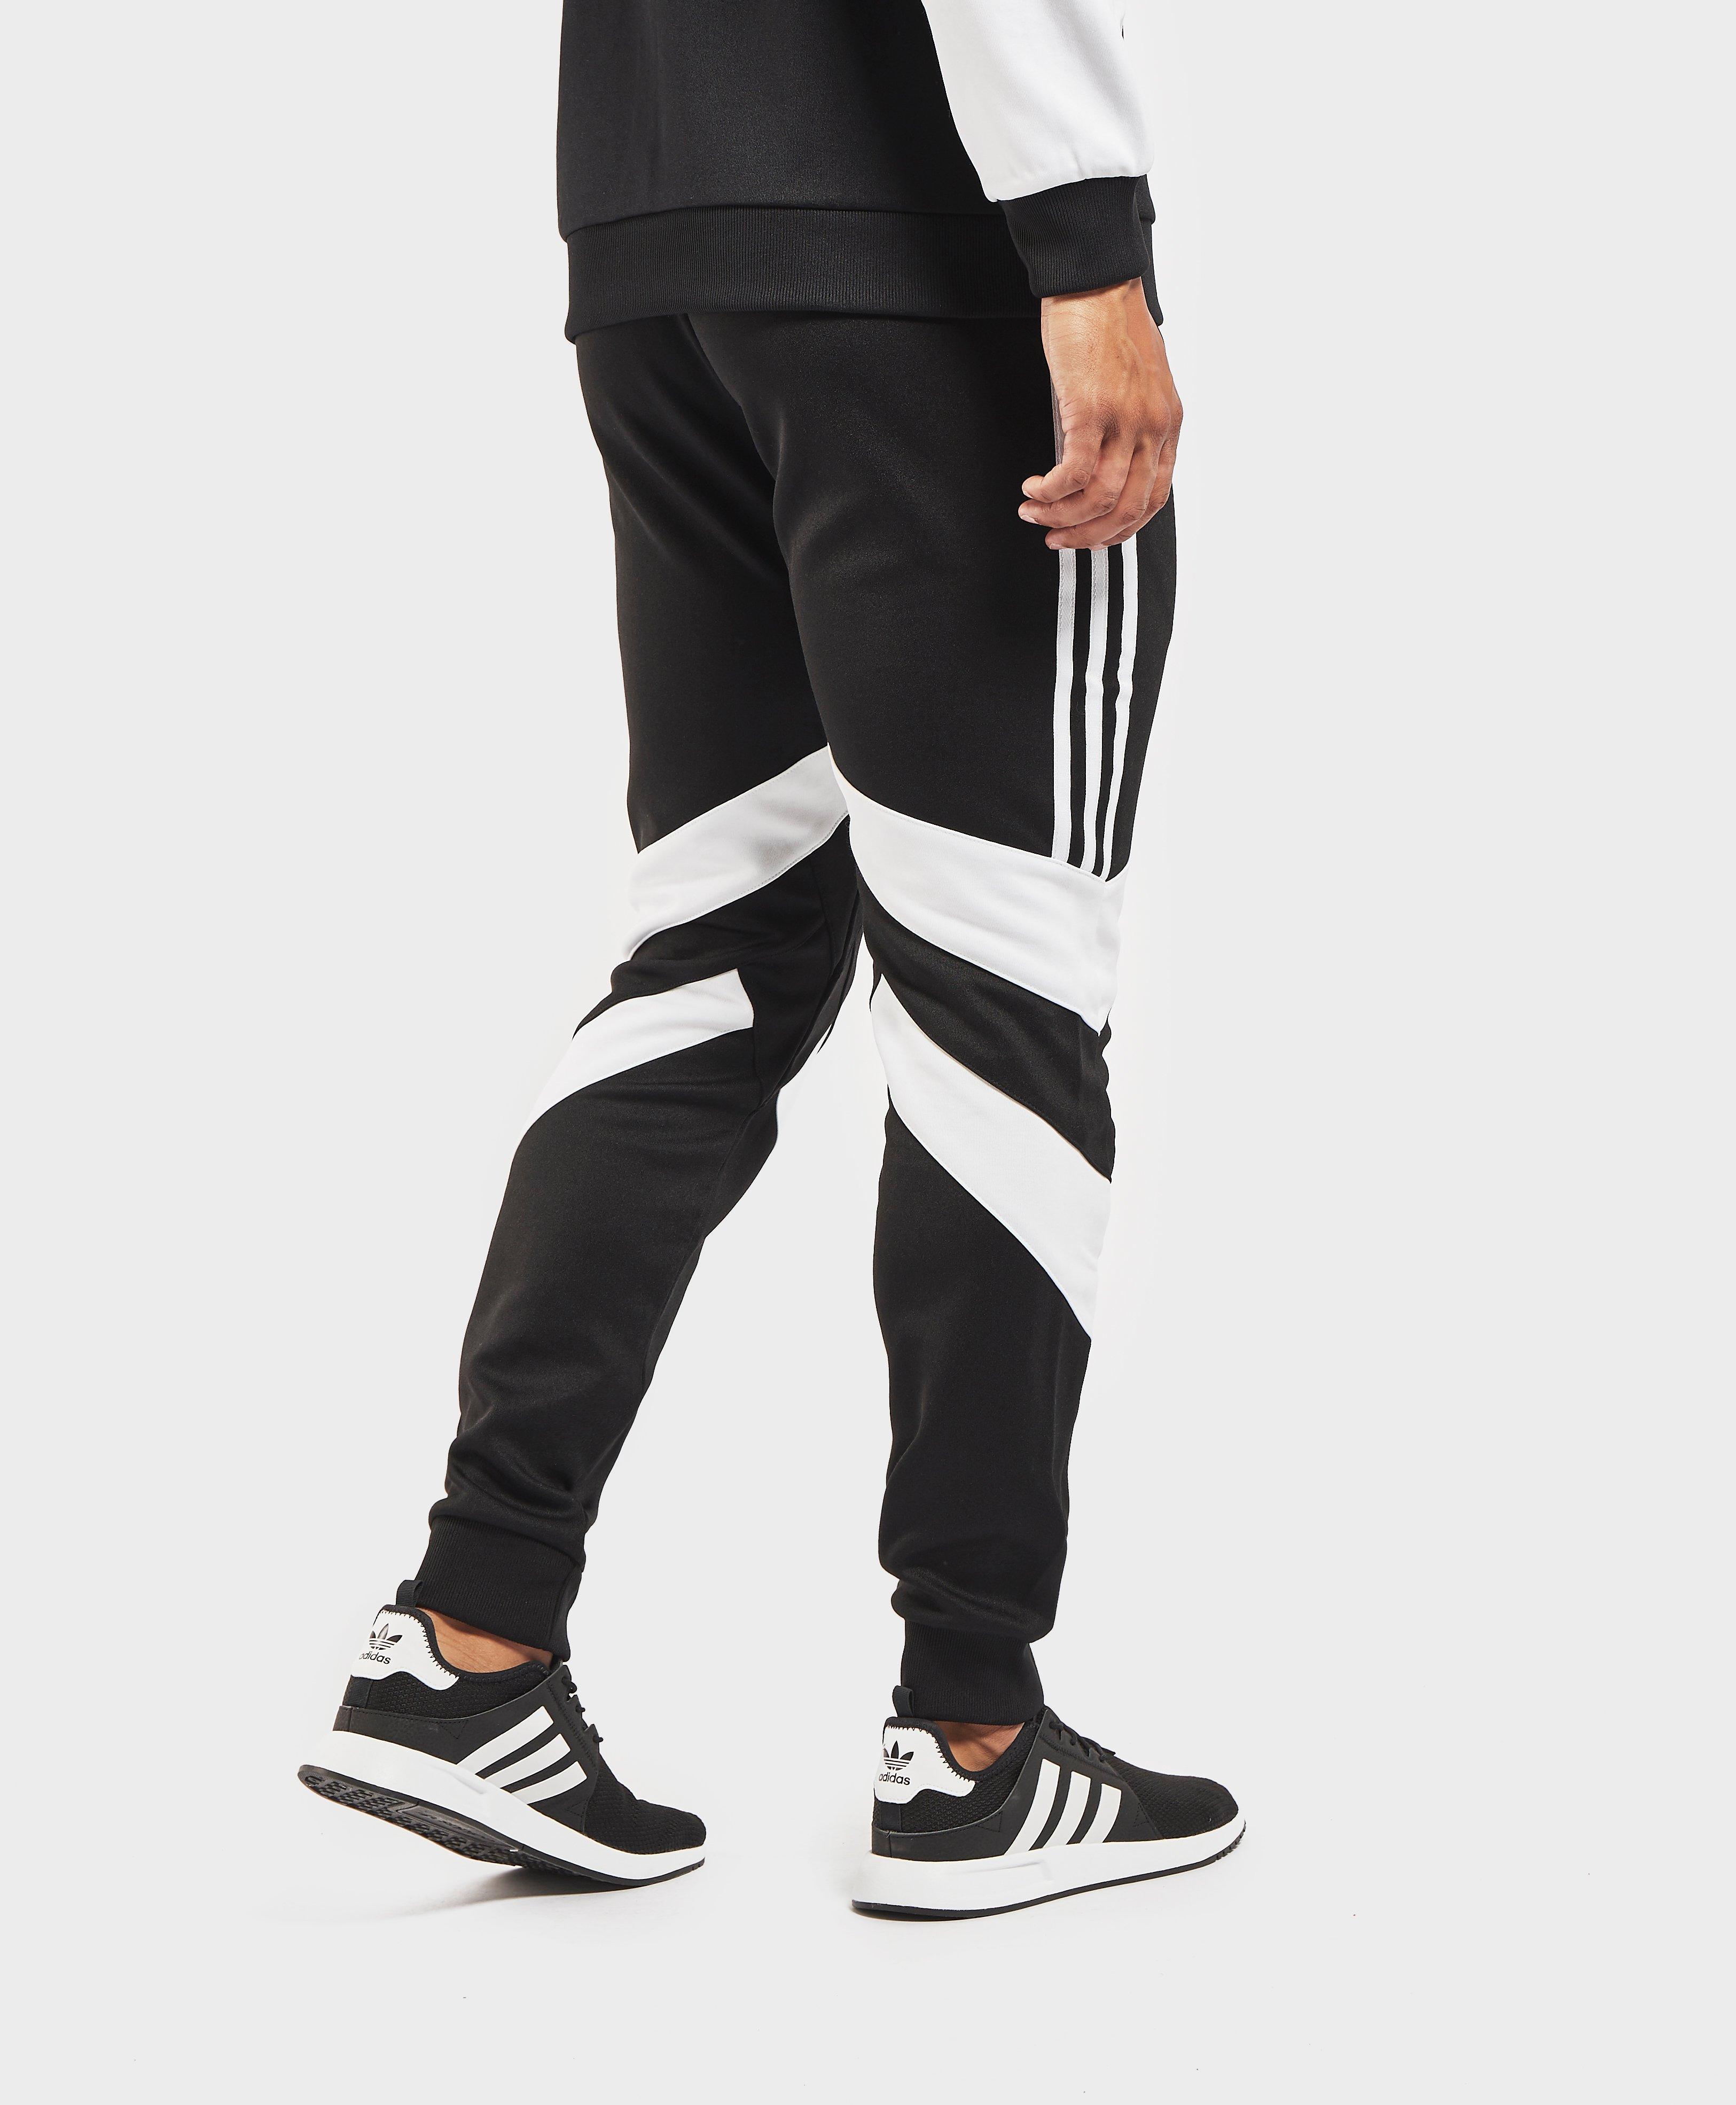 Lyst - Adidas Originals Palmeston Track Pants in Black for Men